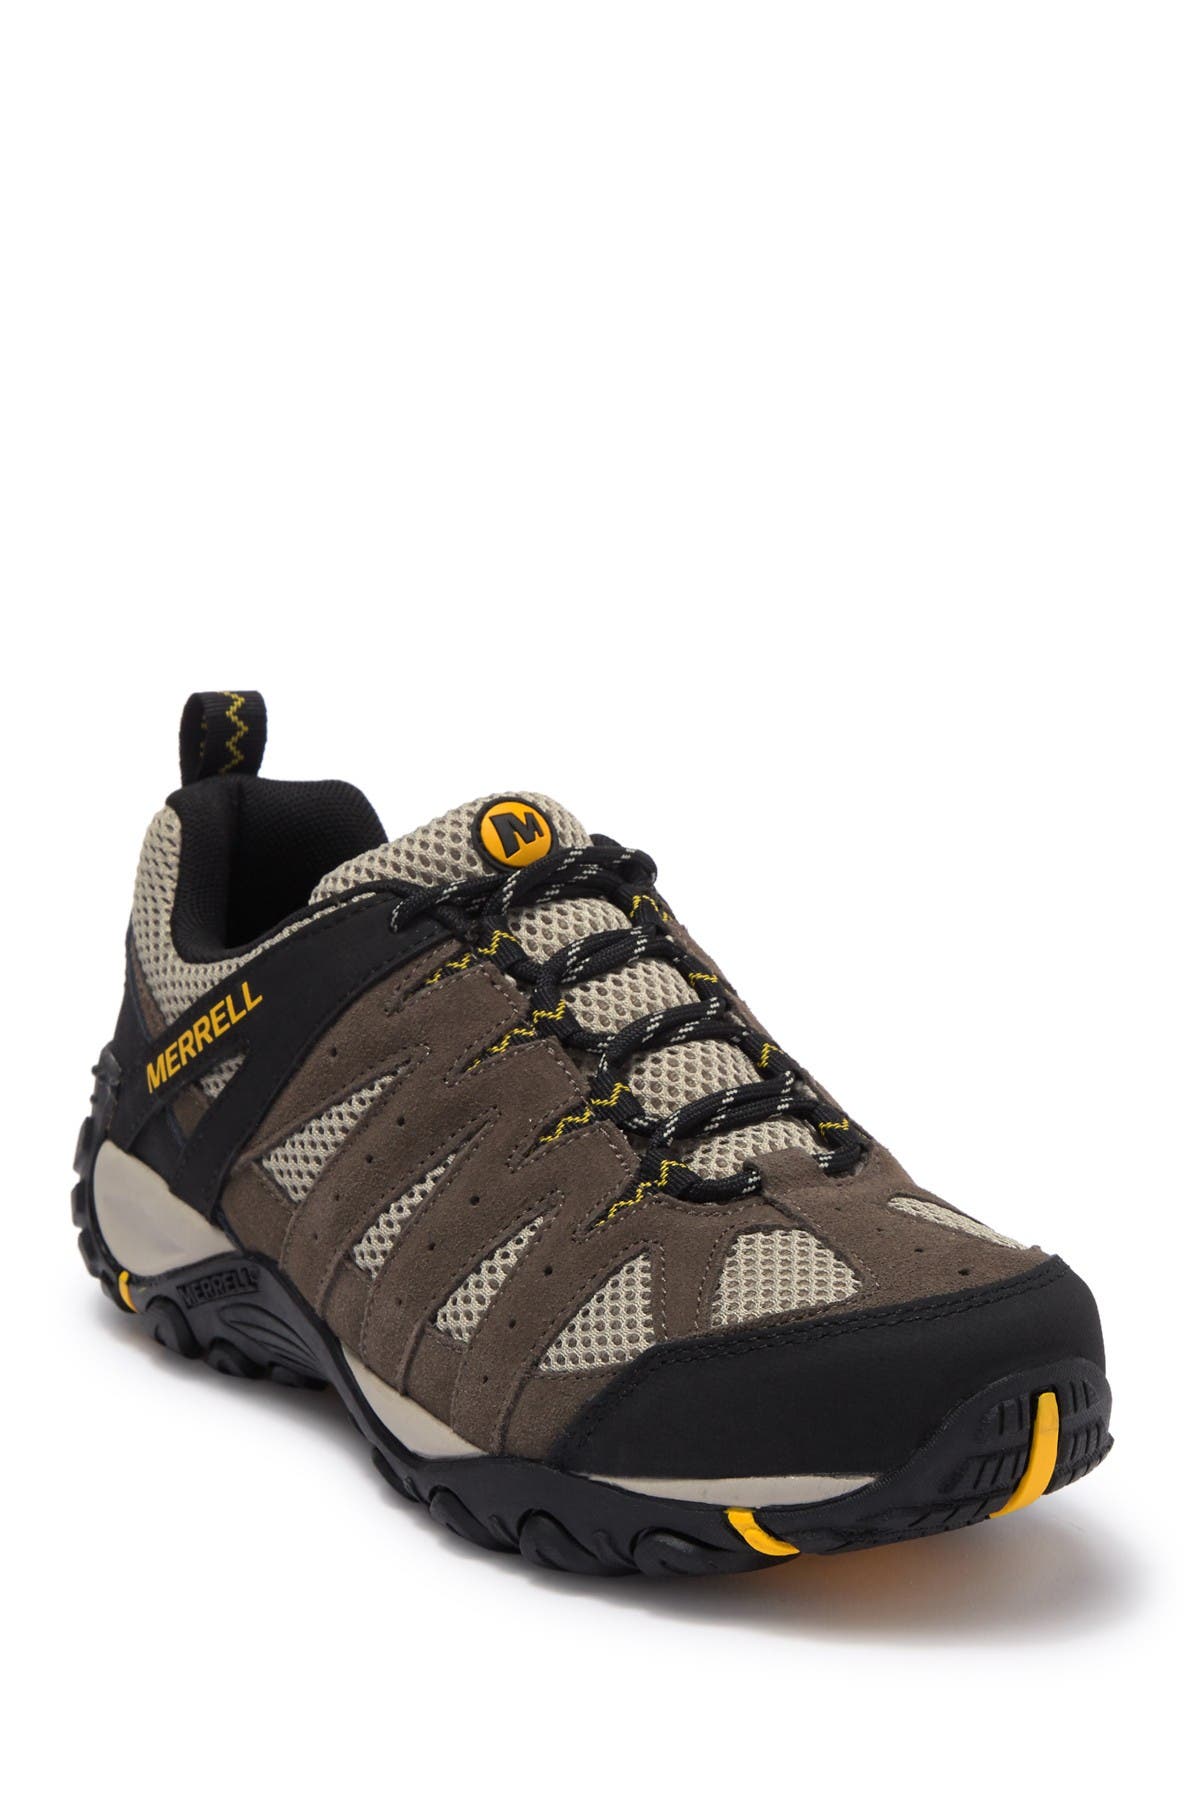 Merrell | Accentor 2 Hiking Sneaker 